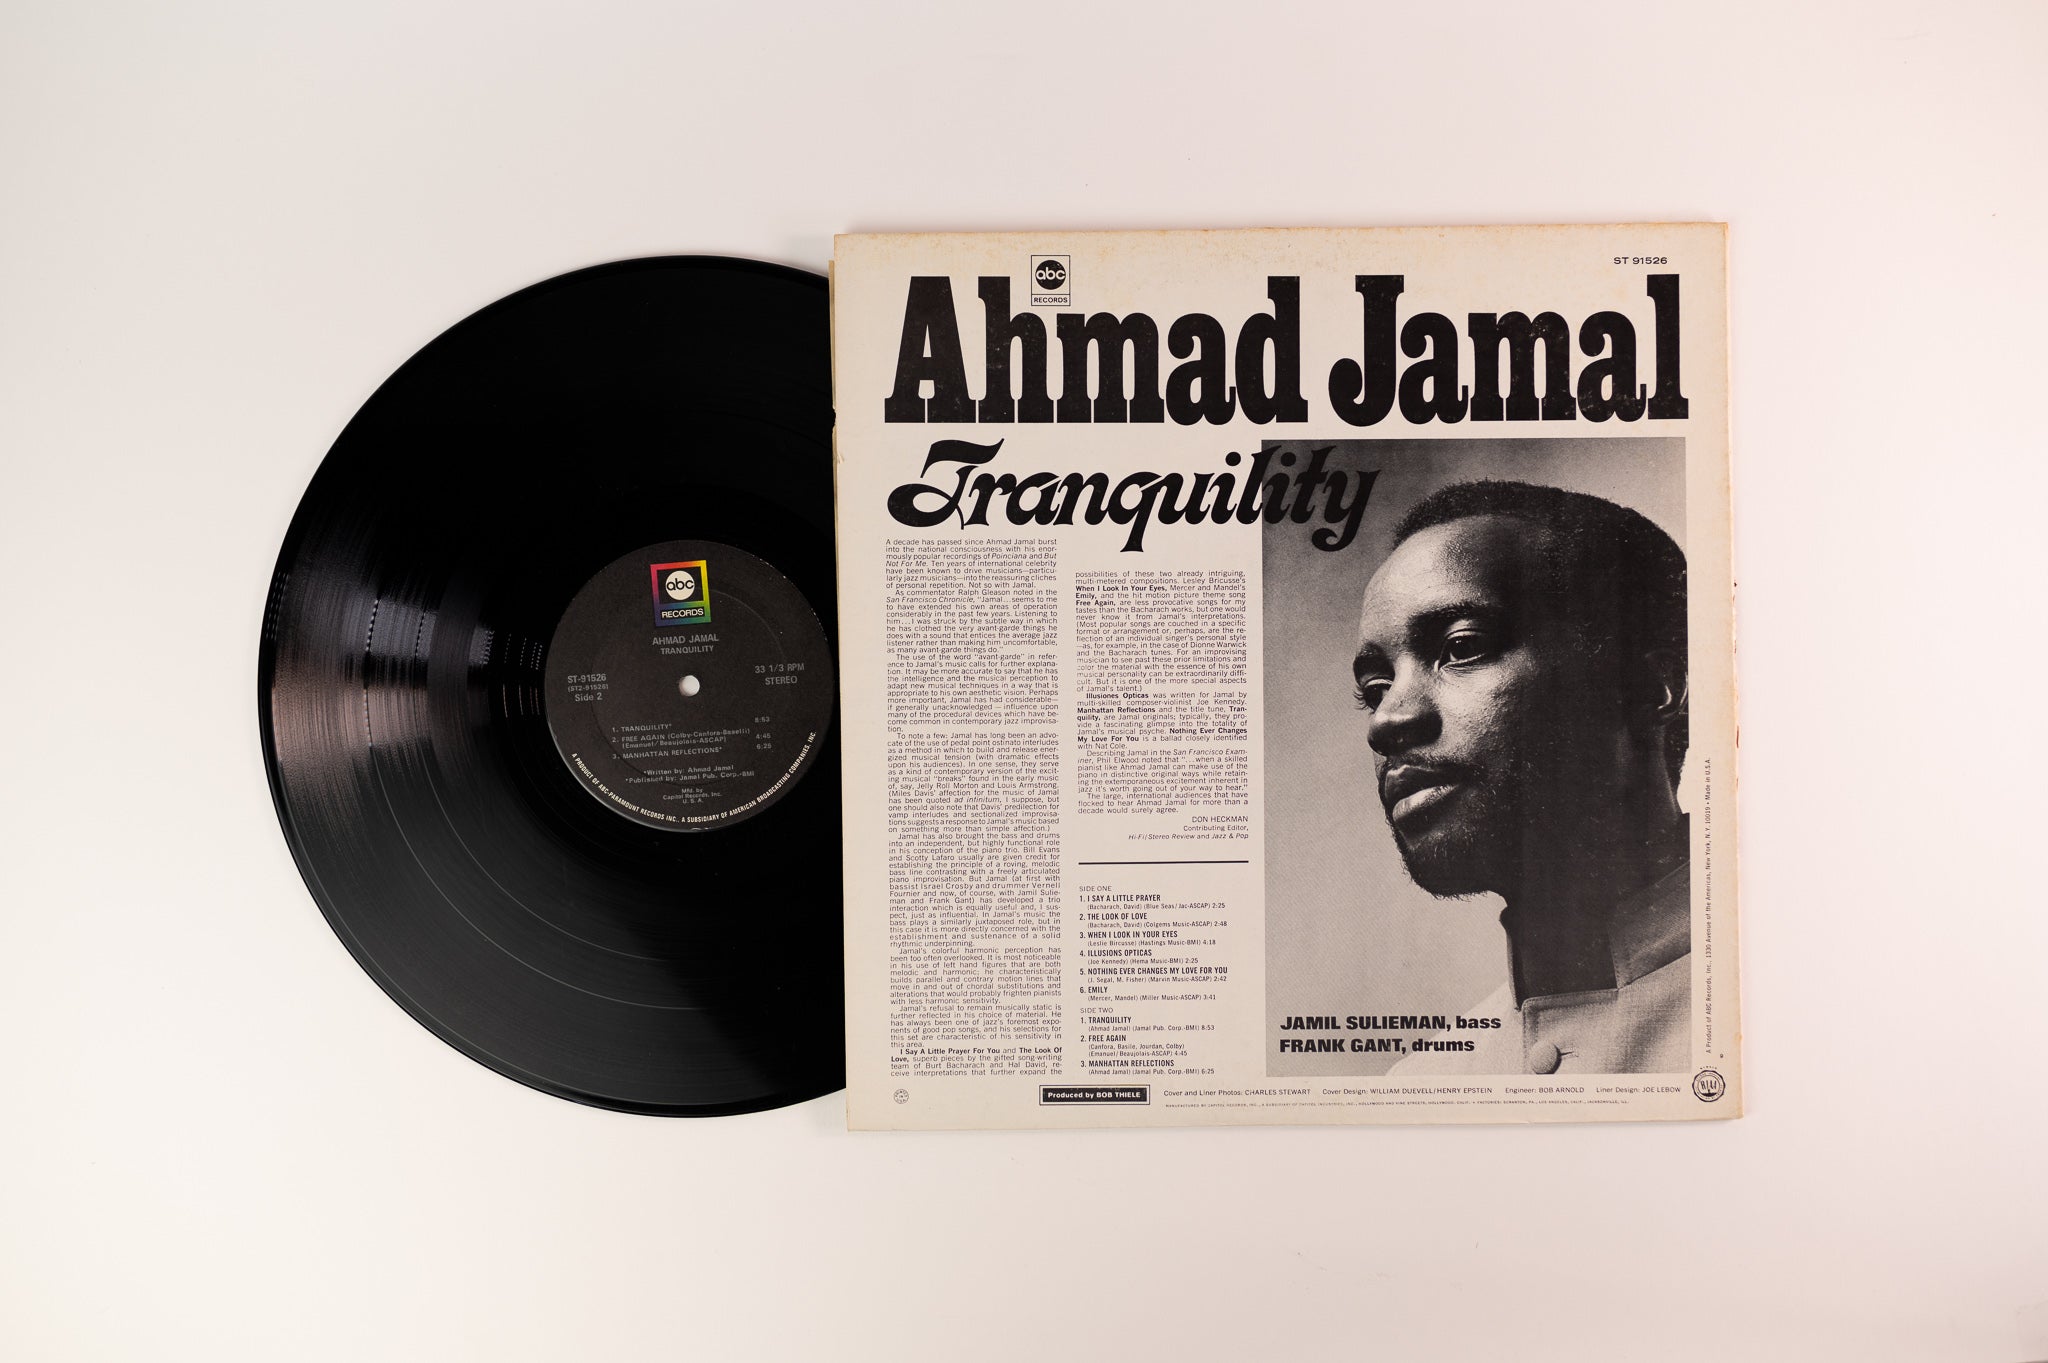 Ahmad Jamal - Tranquility on ABC Records